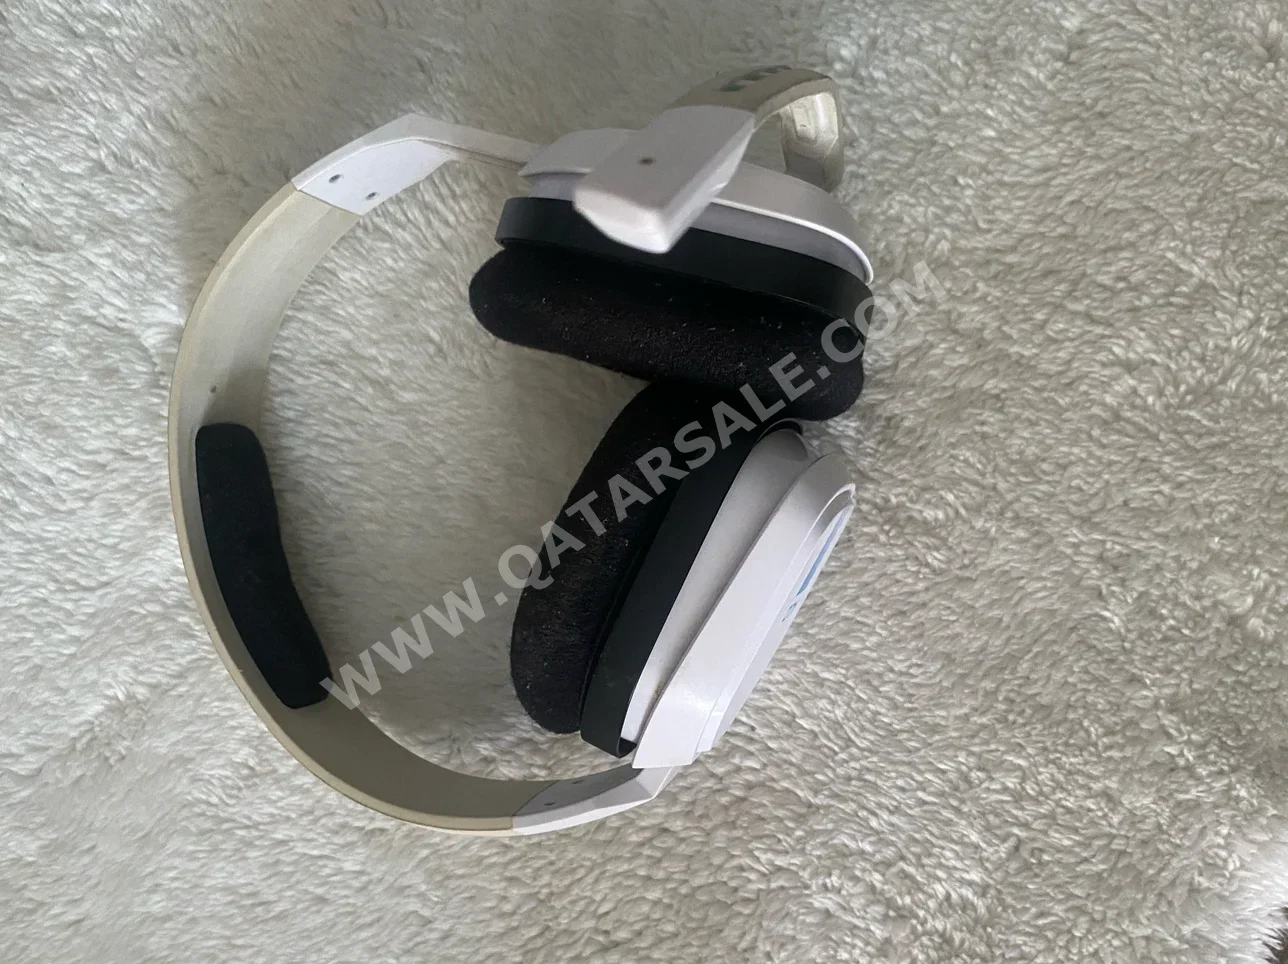 Console Accessories Over Ear Headphones  Logitech  Flight Yoke System  White